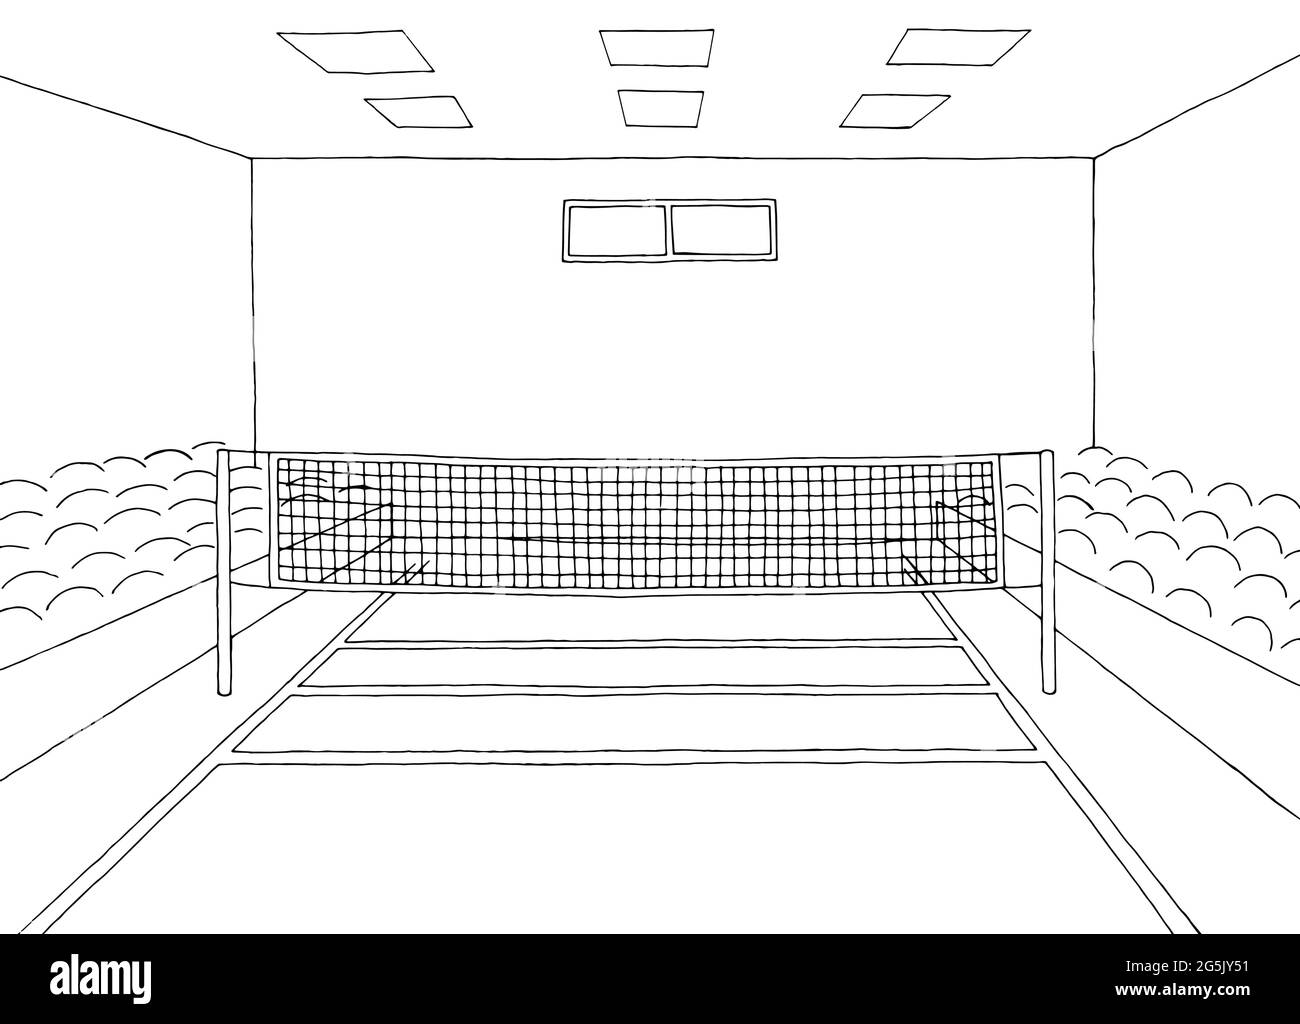 Volleyball Fitnessstudio Sport drinnen Grafik schwarz weiß Skizze Illustration Vektor Stock Vektor